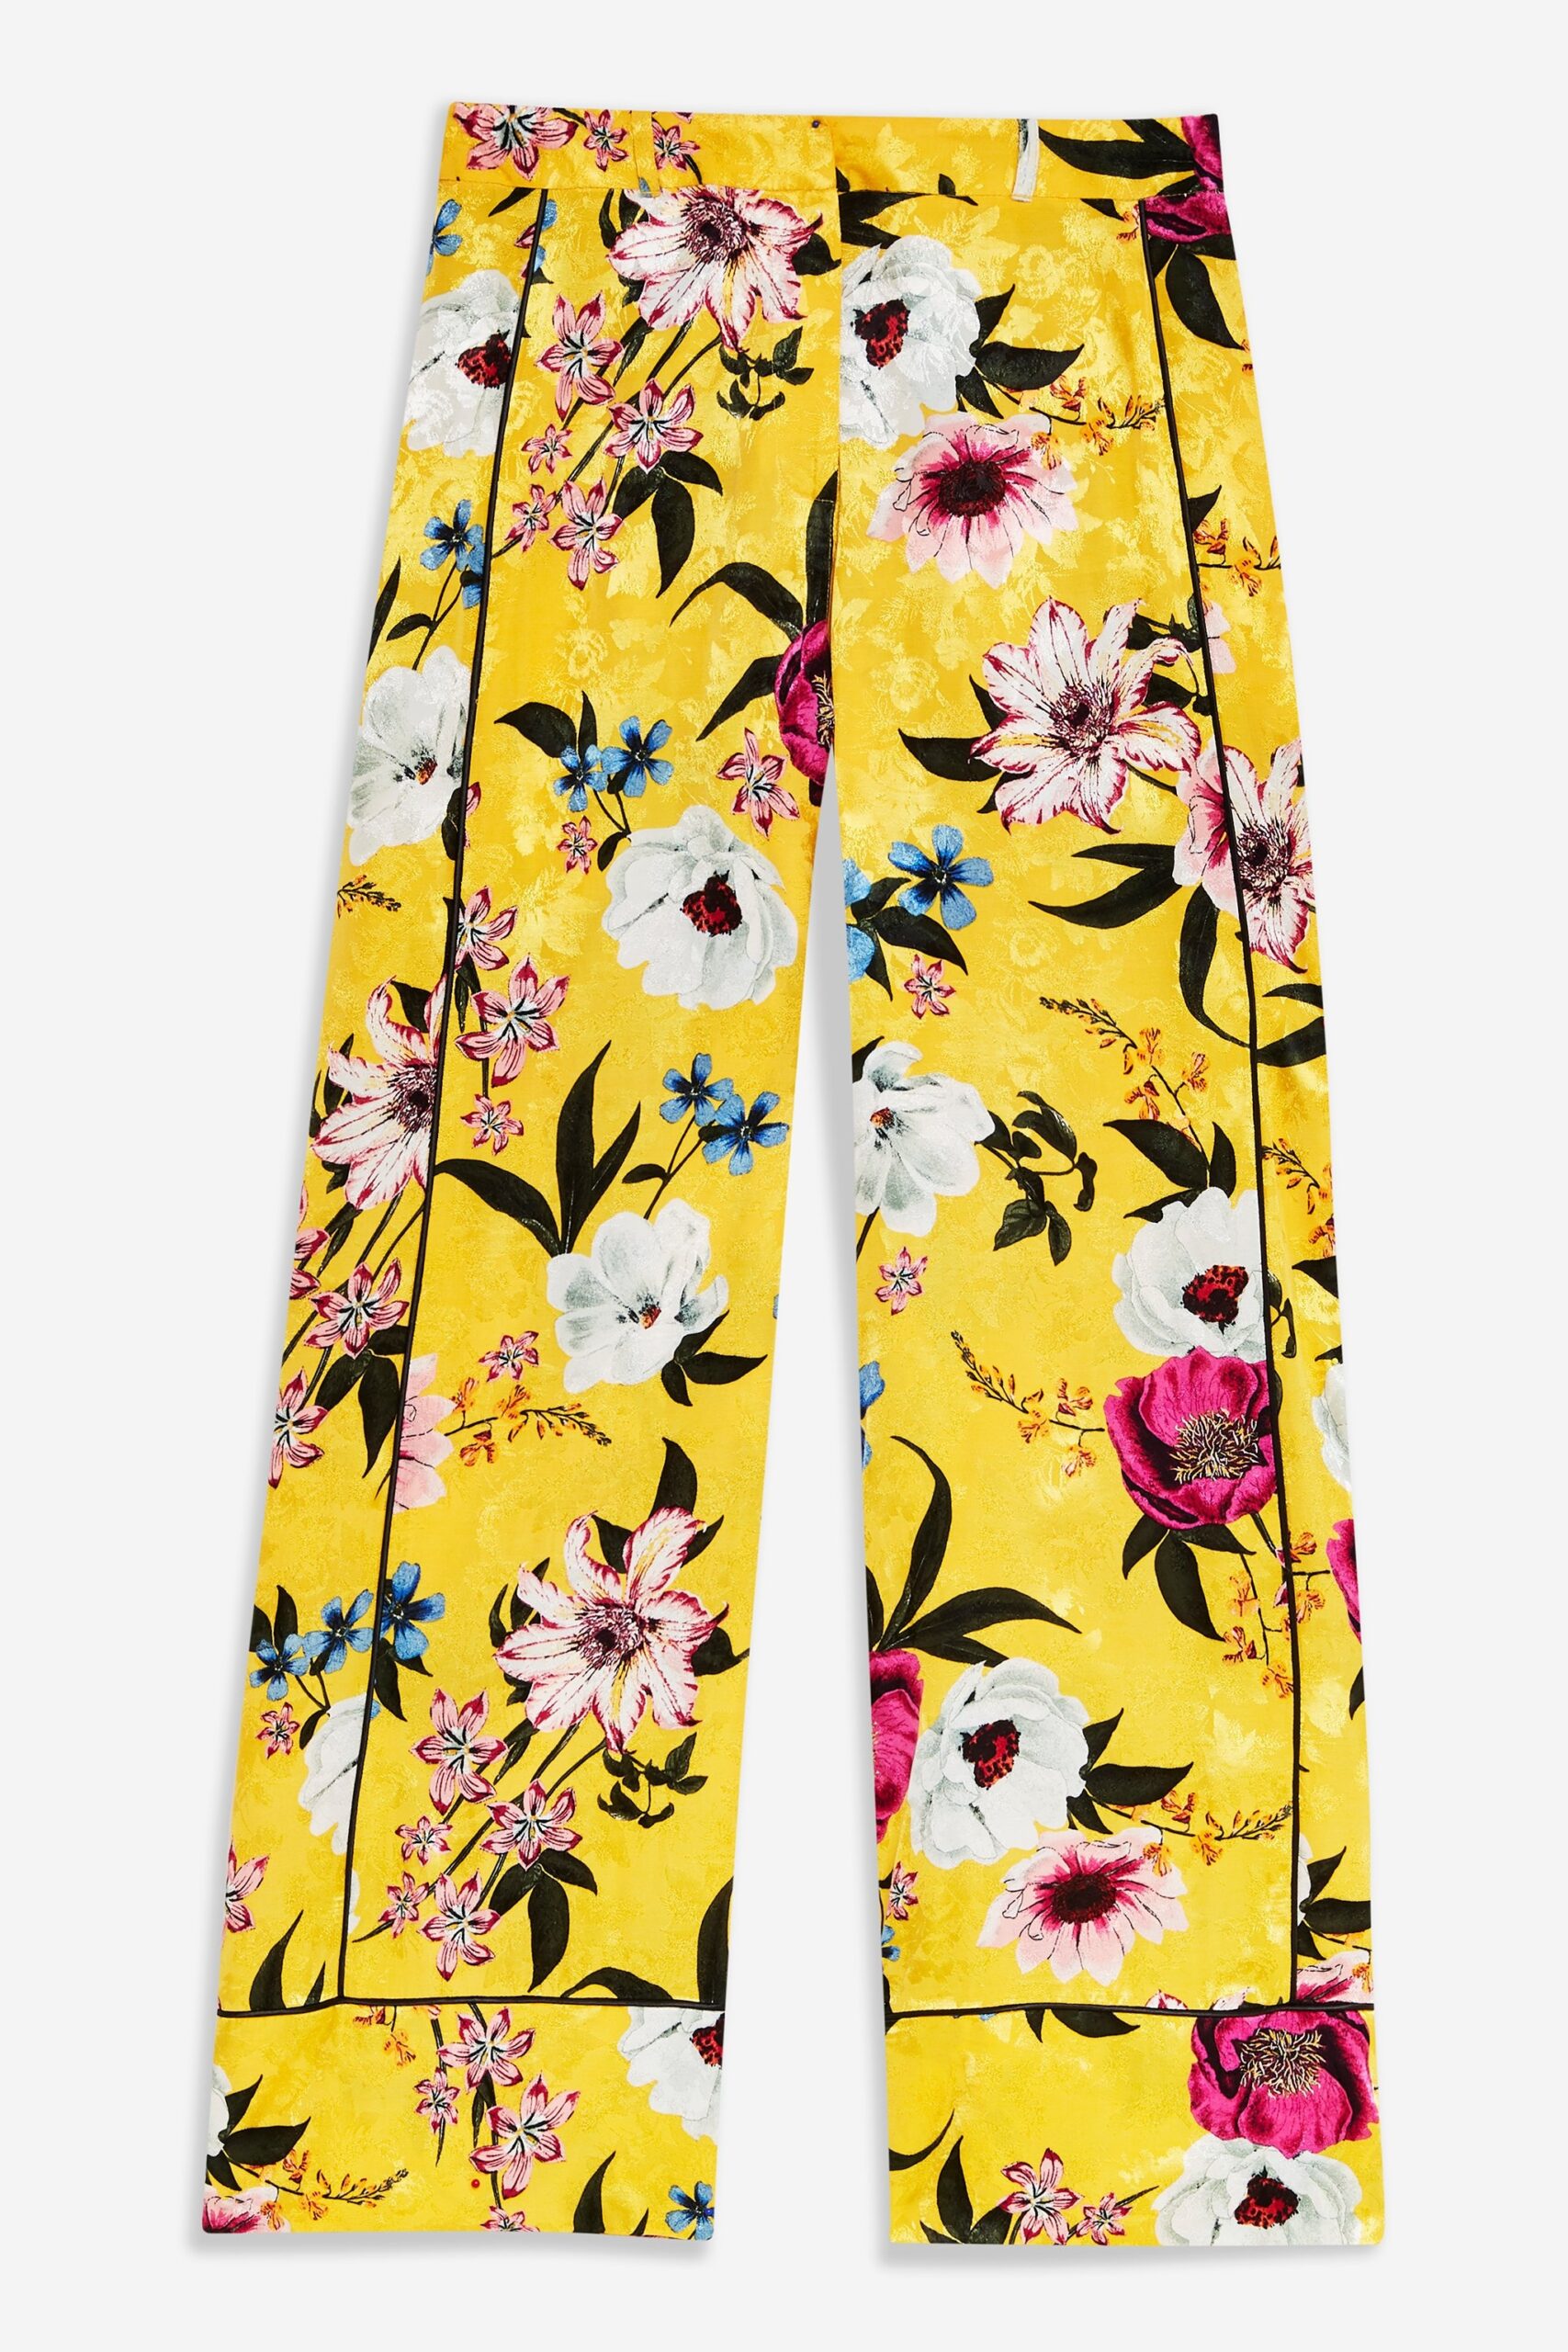 Ariana Madix's Yellow Floral Print Pants